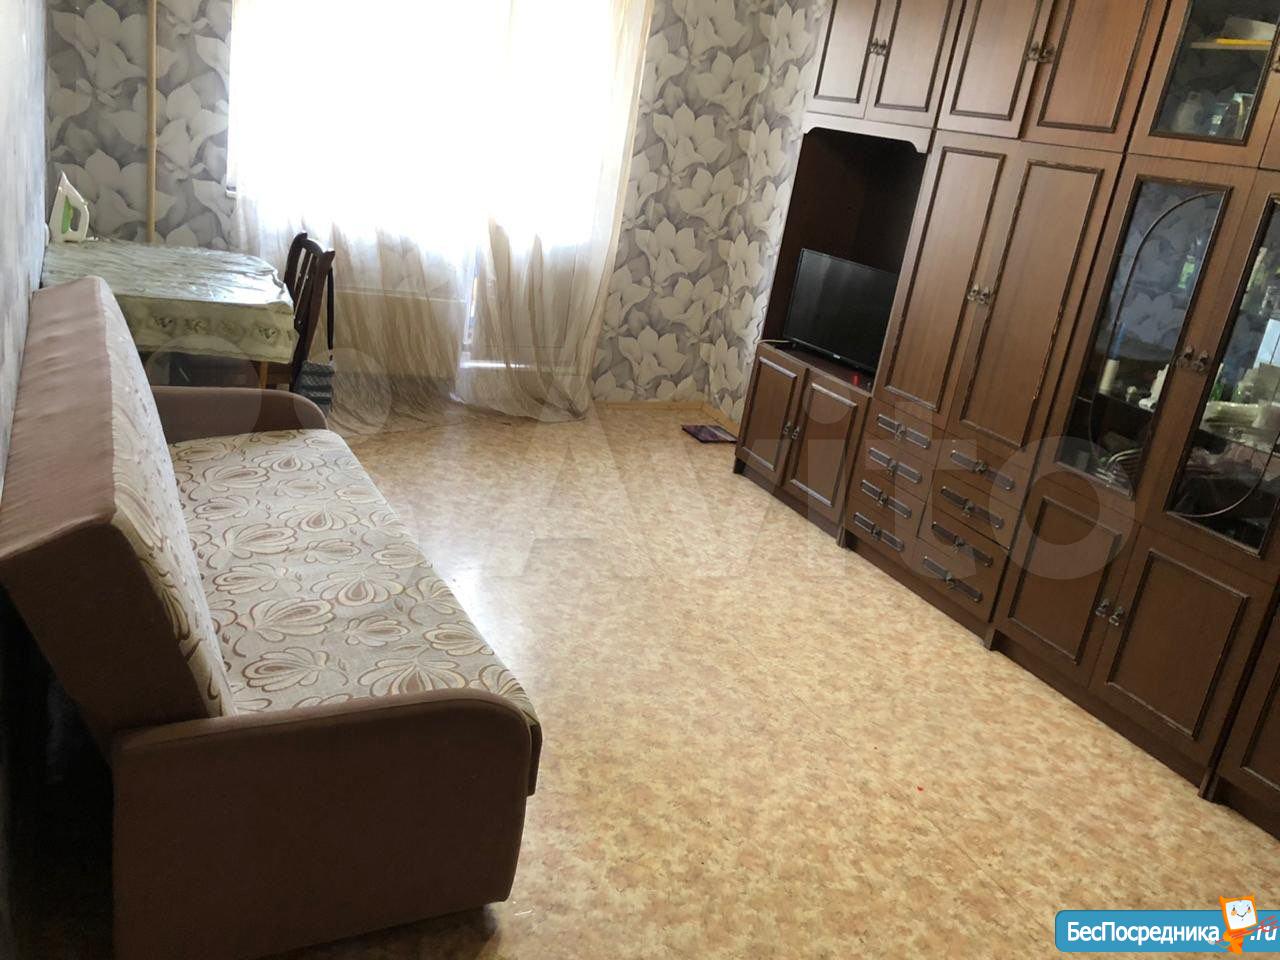 Снять квартиру в коврове без мебели